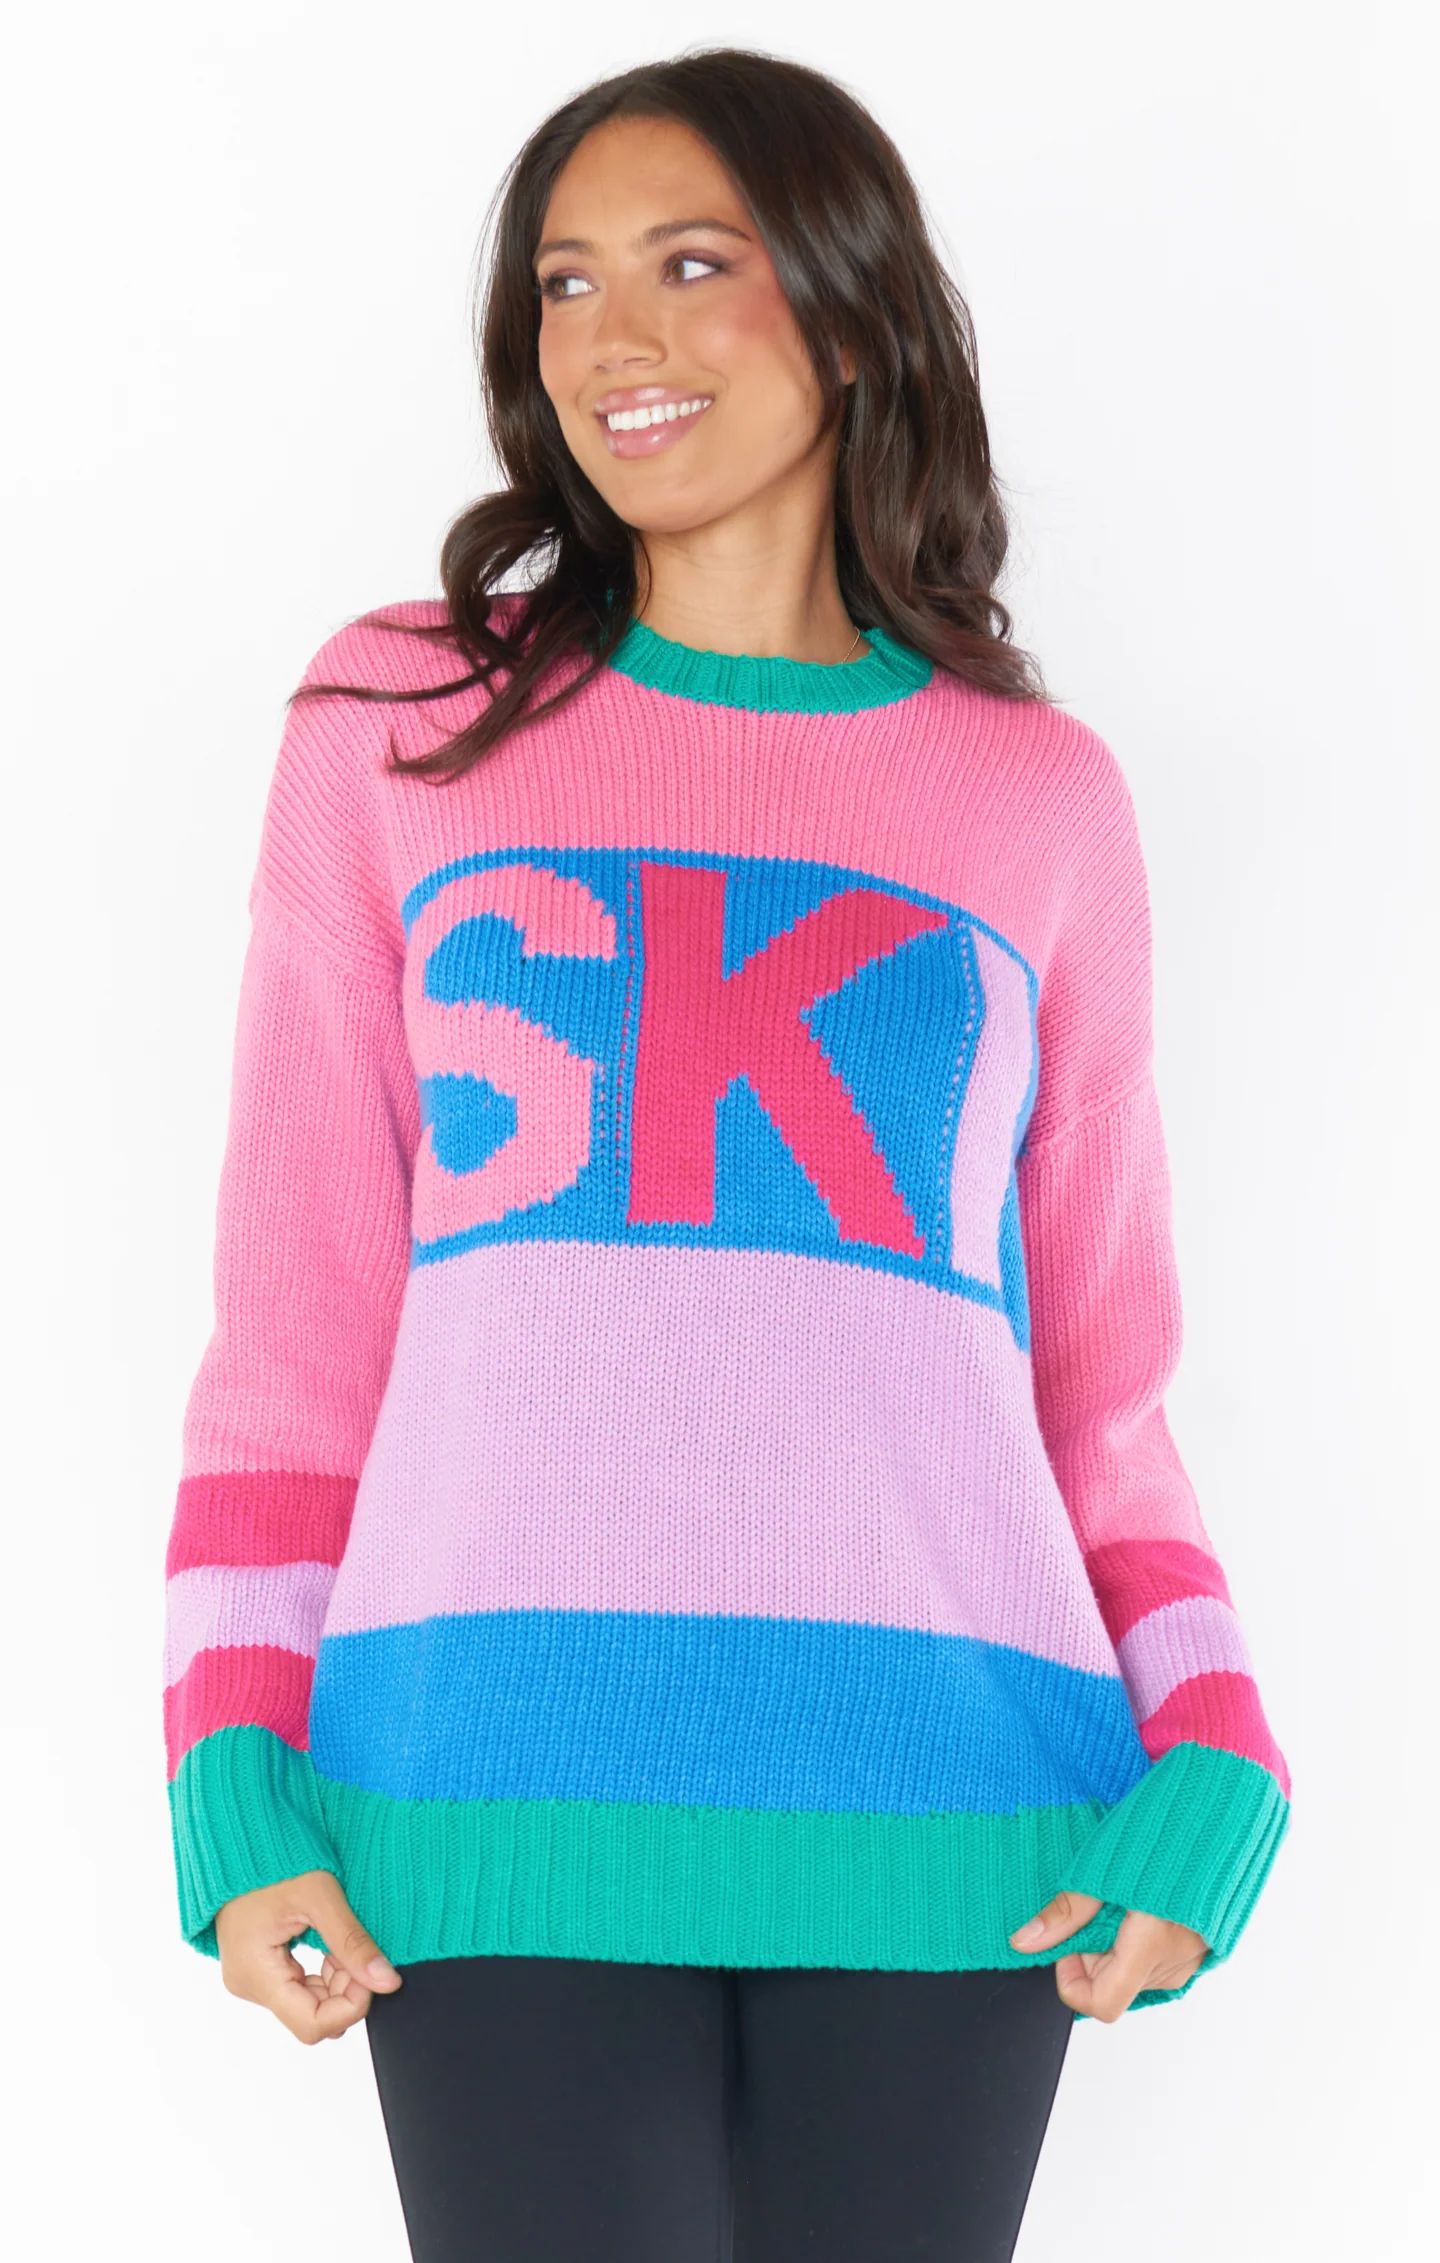 Ski in Sweater ~ Ski Knit Black | Show Me Your Mumu